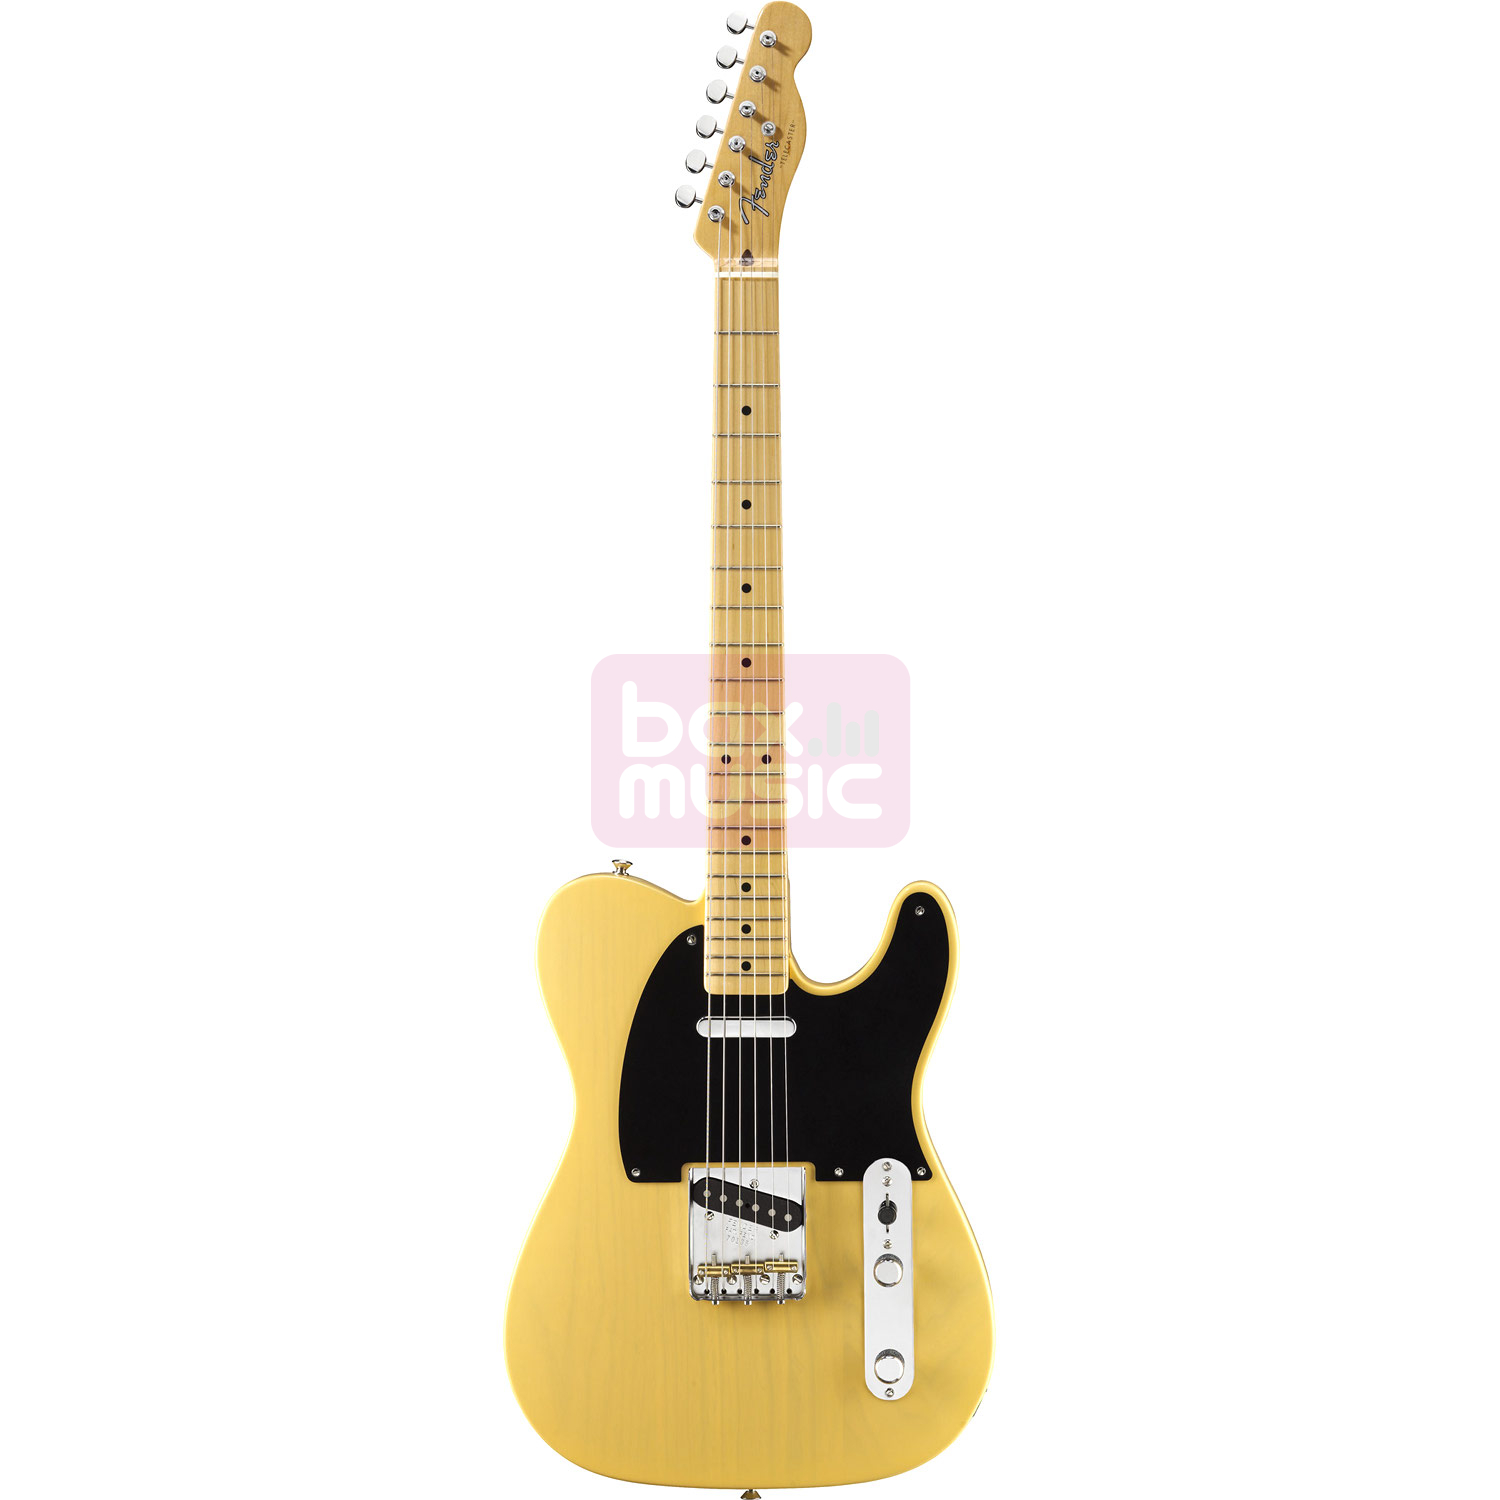 Fender American Vintage 52 Telecaster Butterscotch Blonde